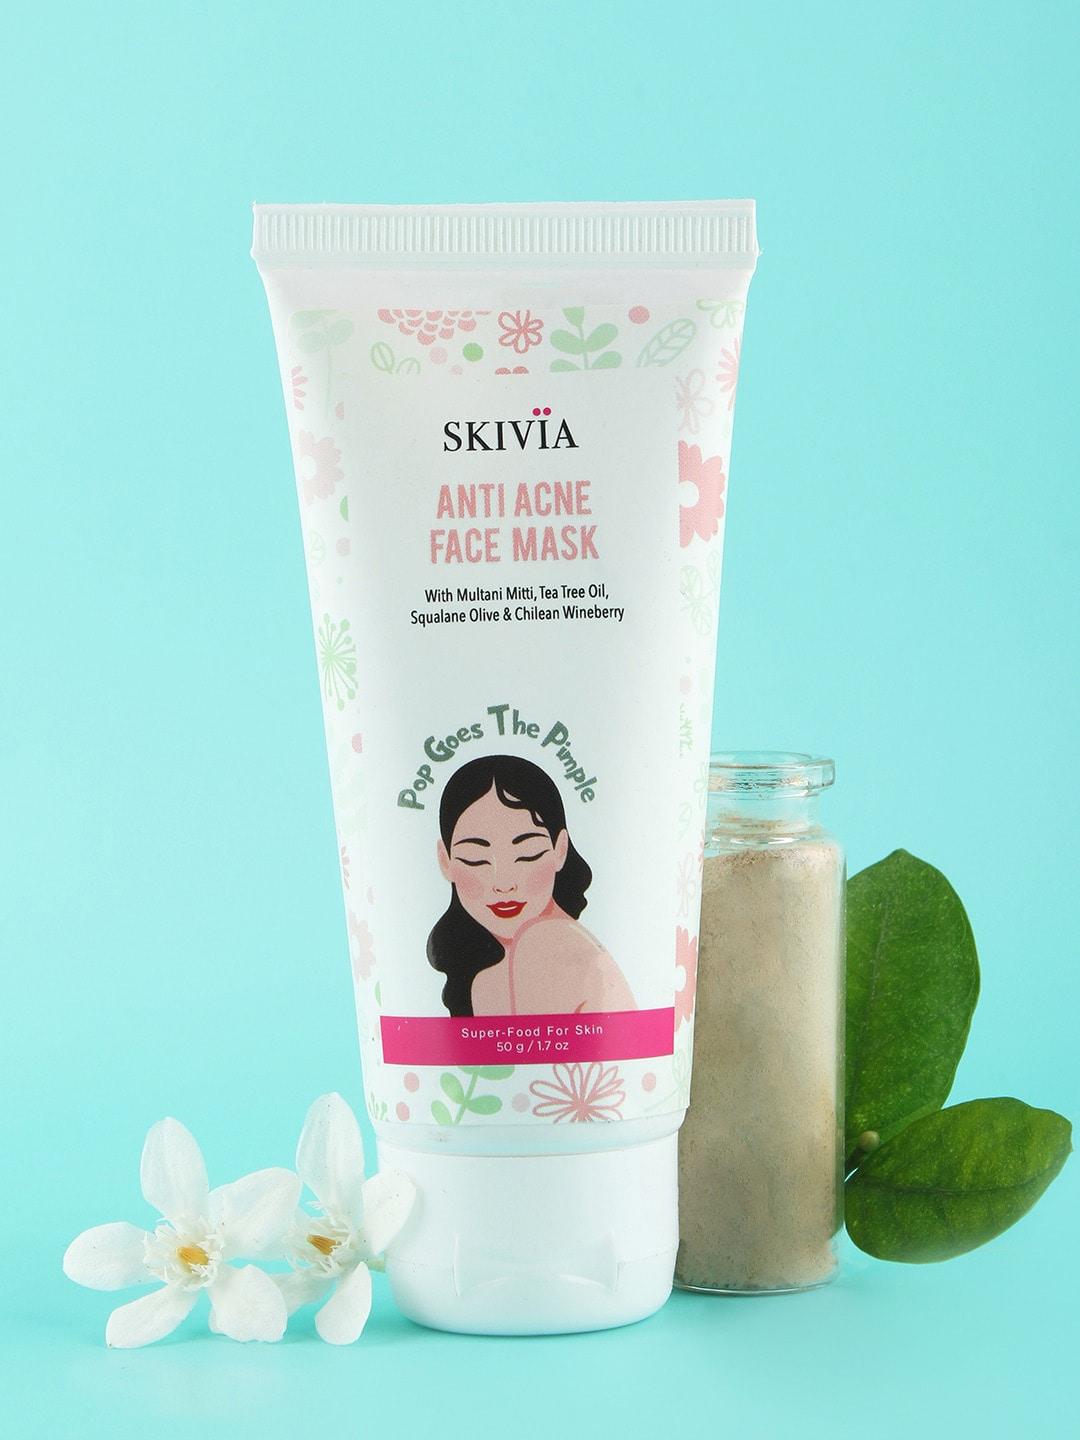 SKIVIA Anti Acne Face Mask With Multani Mitti & Tea Tree Oil To Remove Excess Oil - 50 g